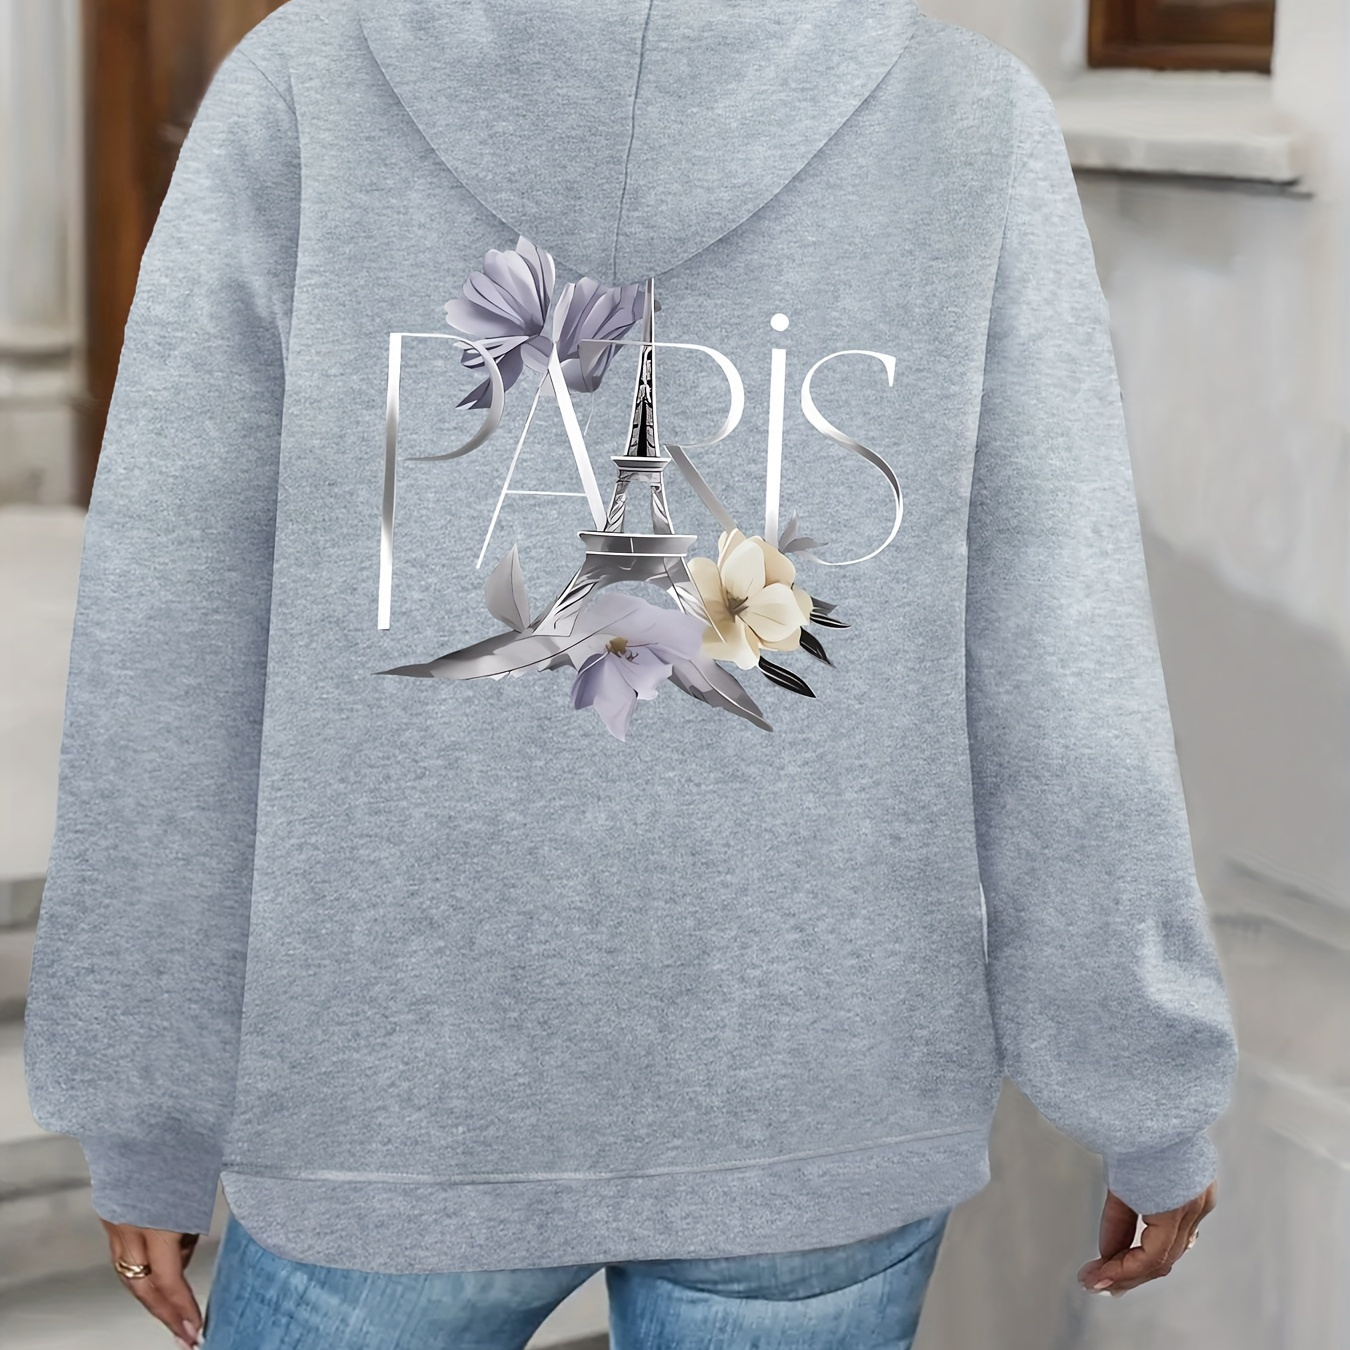 

Paris Print Zipper Pocket Hoodie, Drawstring Casual Hooded Sweatshirt For Winter & Fall, Women's Clothing